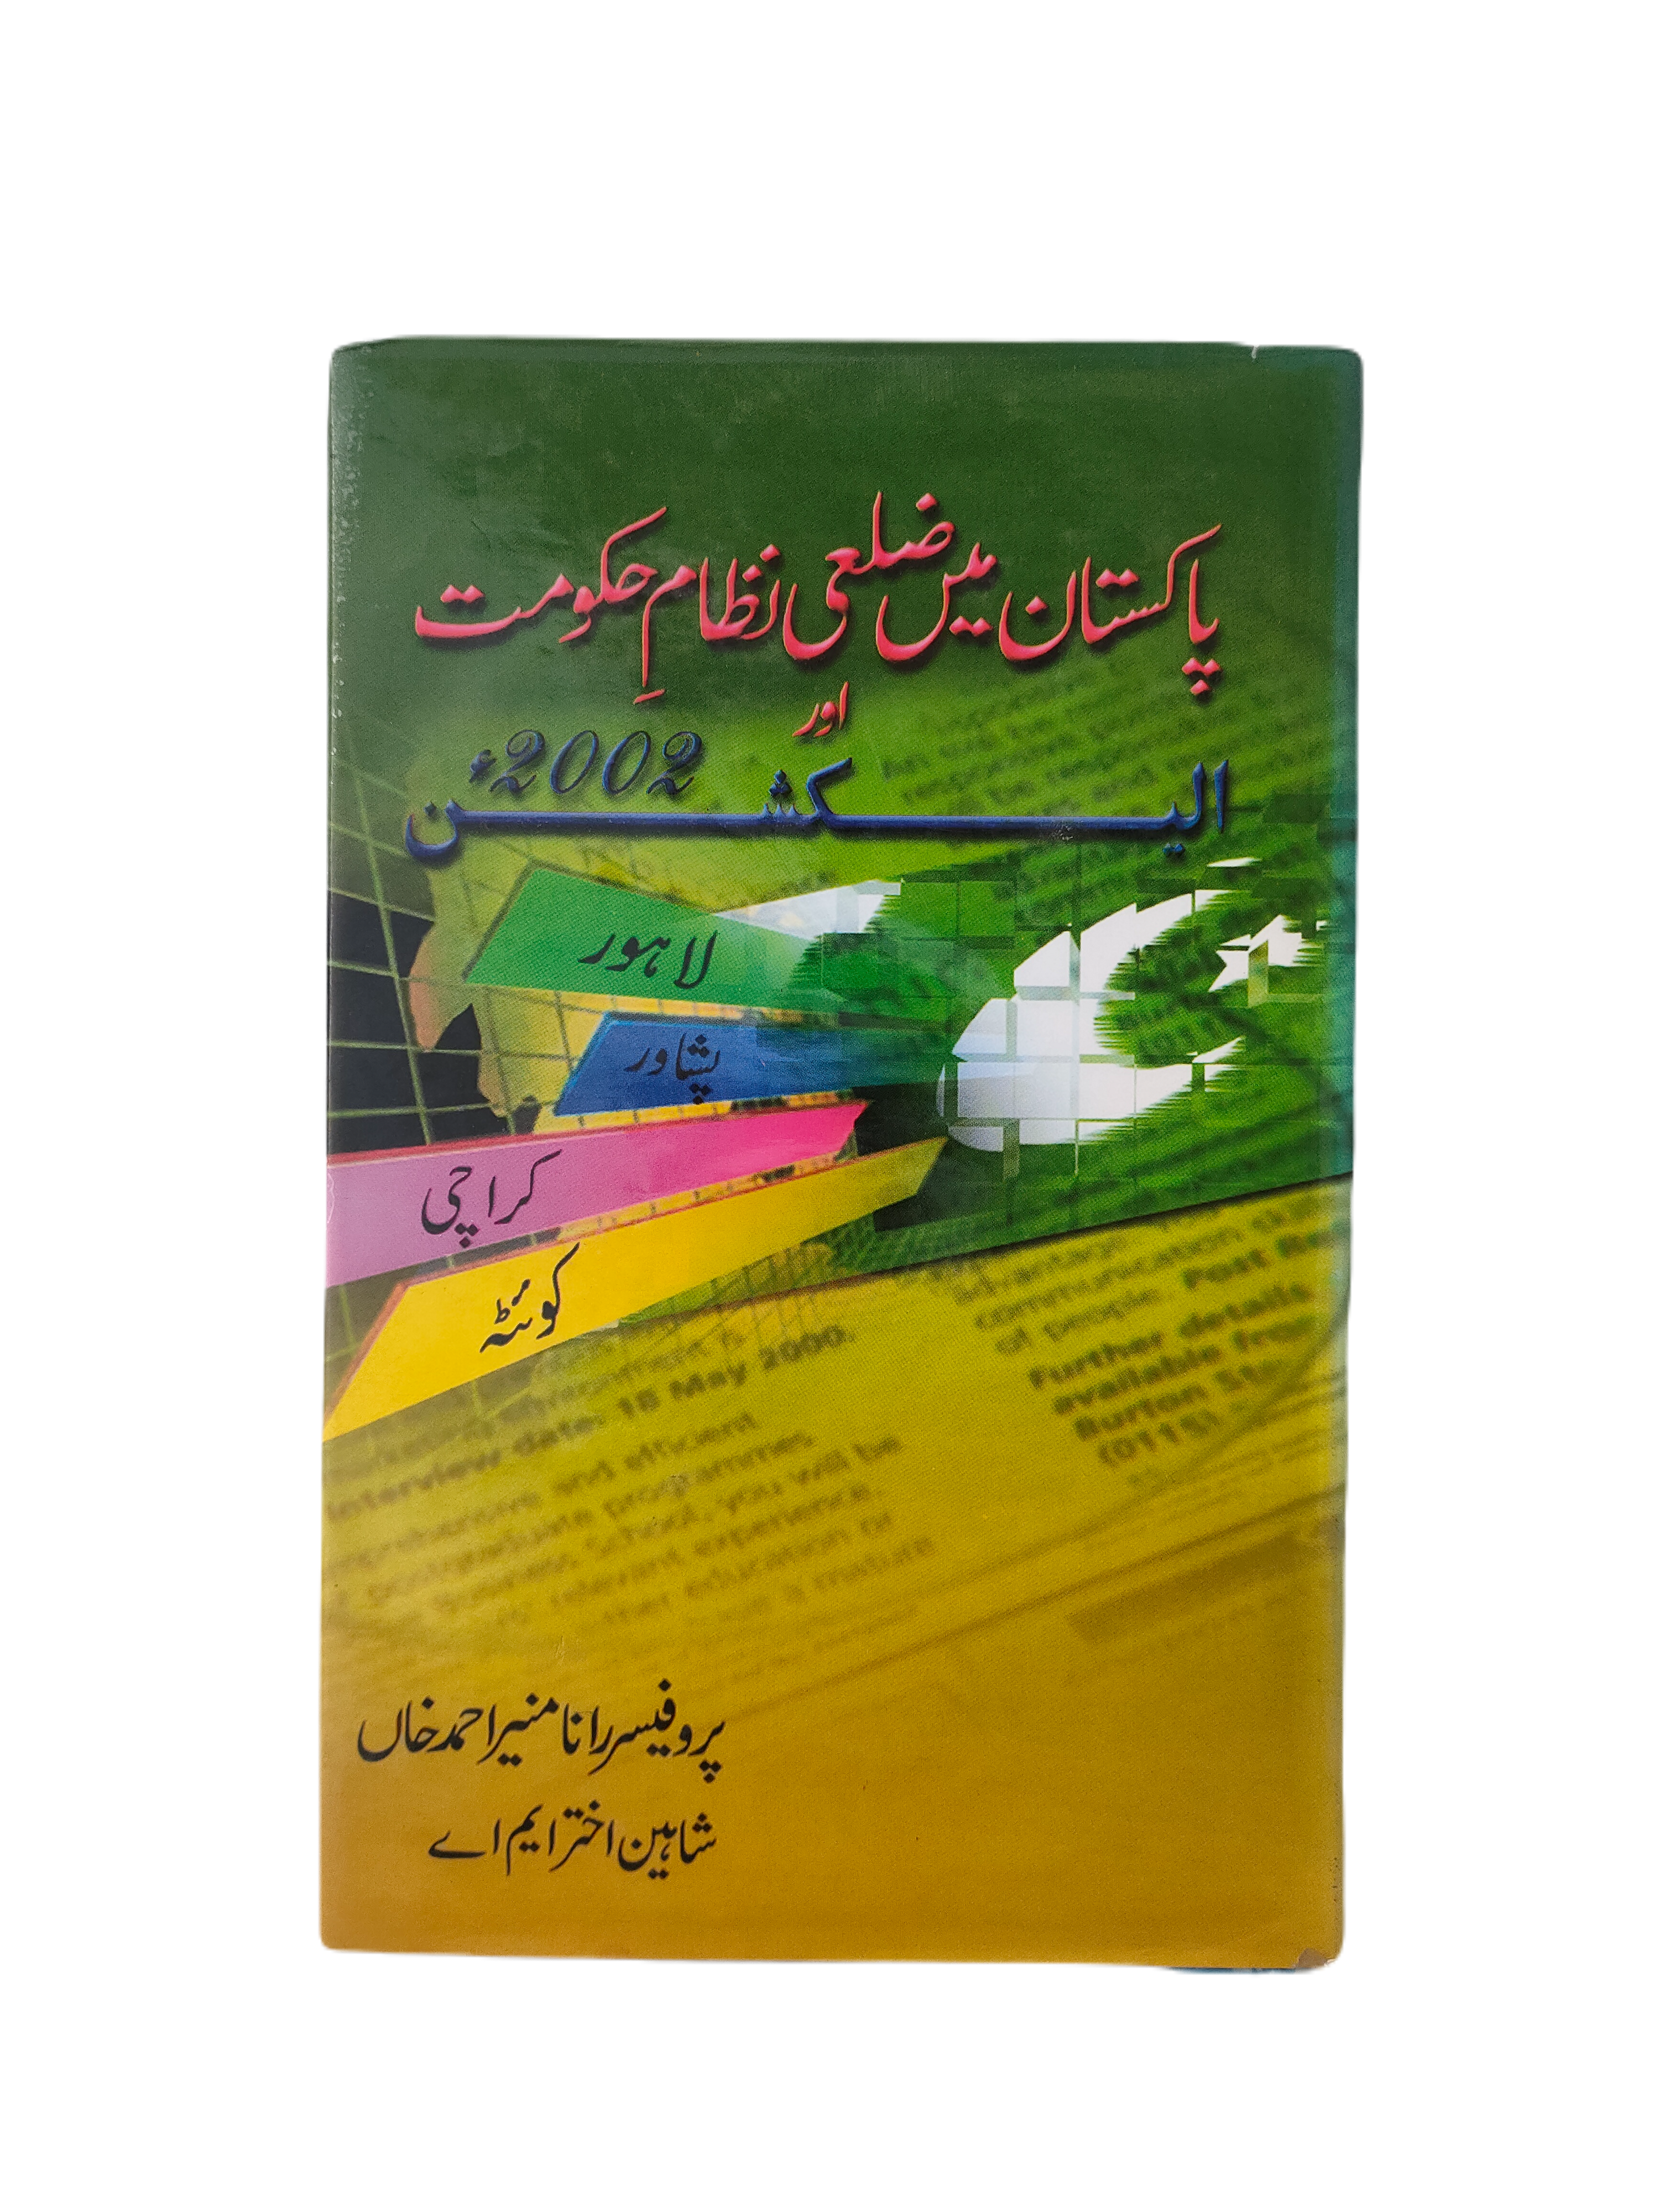 Pakistan Mein Zilai Nizam-e-Hakumat Aur Election 2002 (The District Governance System and Elections 2002 in Pakistan)